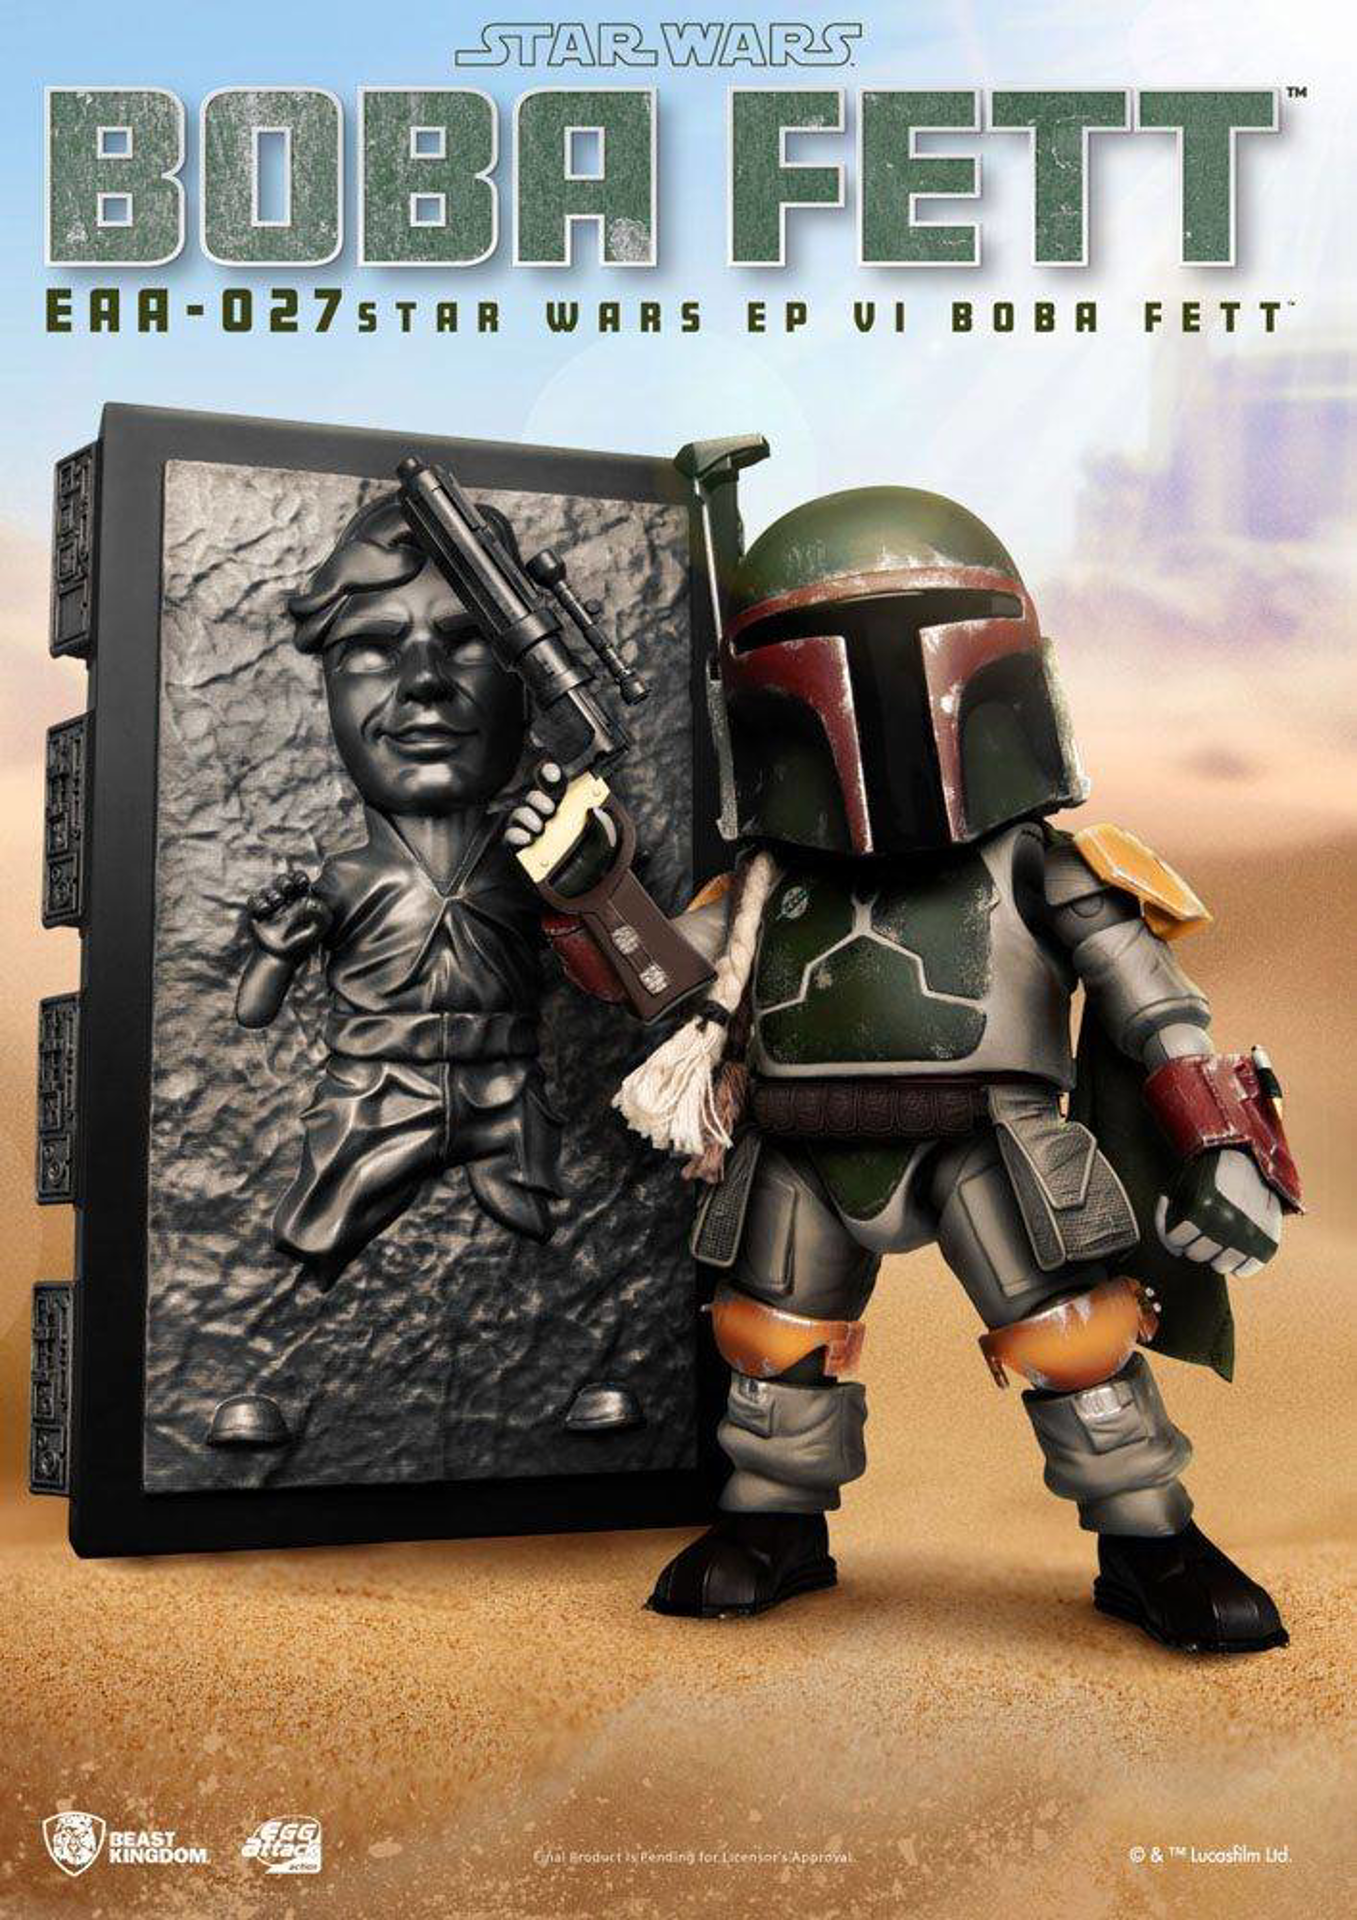 Star Wars - EAA-027 - Star Wars EP VI - Boba Fett